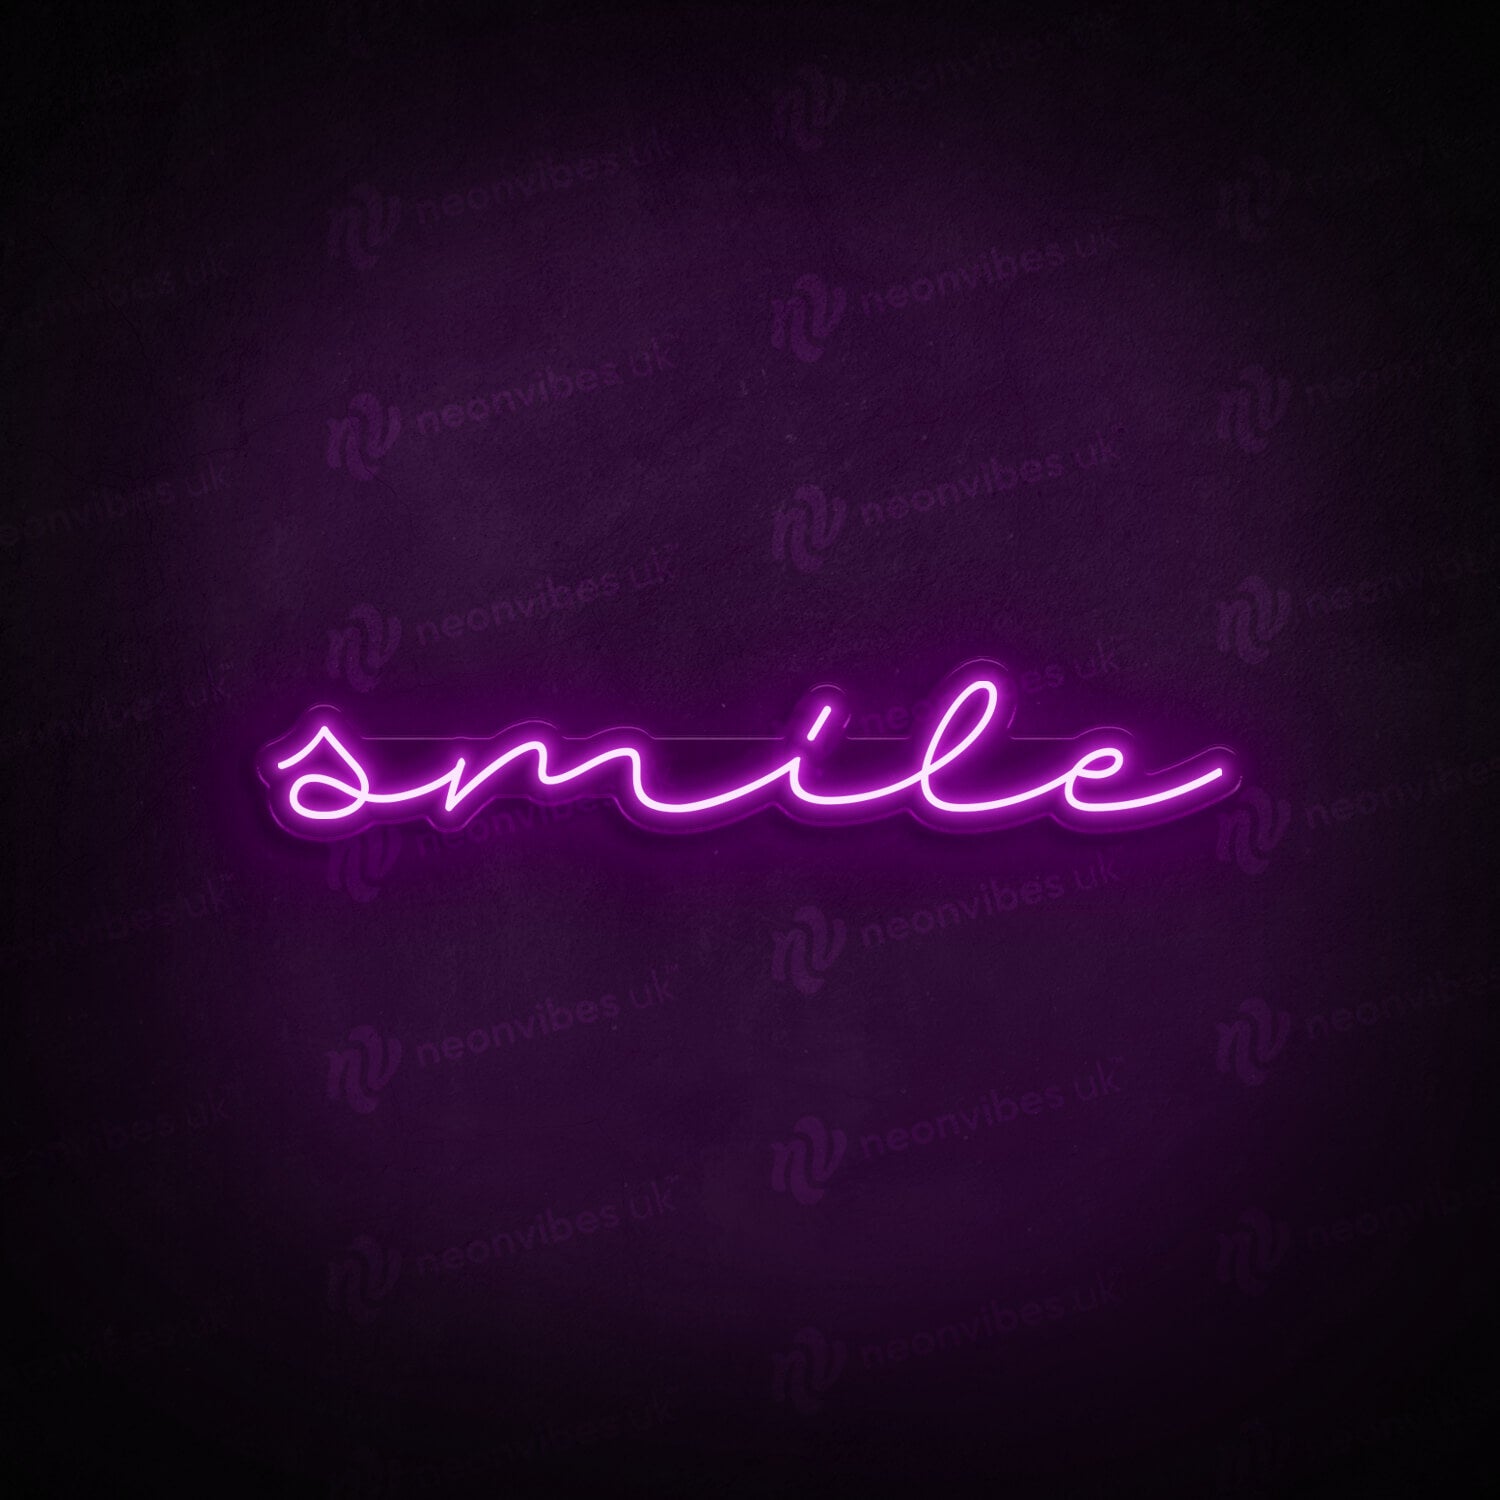 Smile neon sign